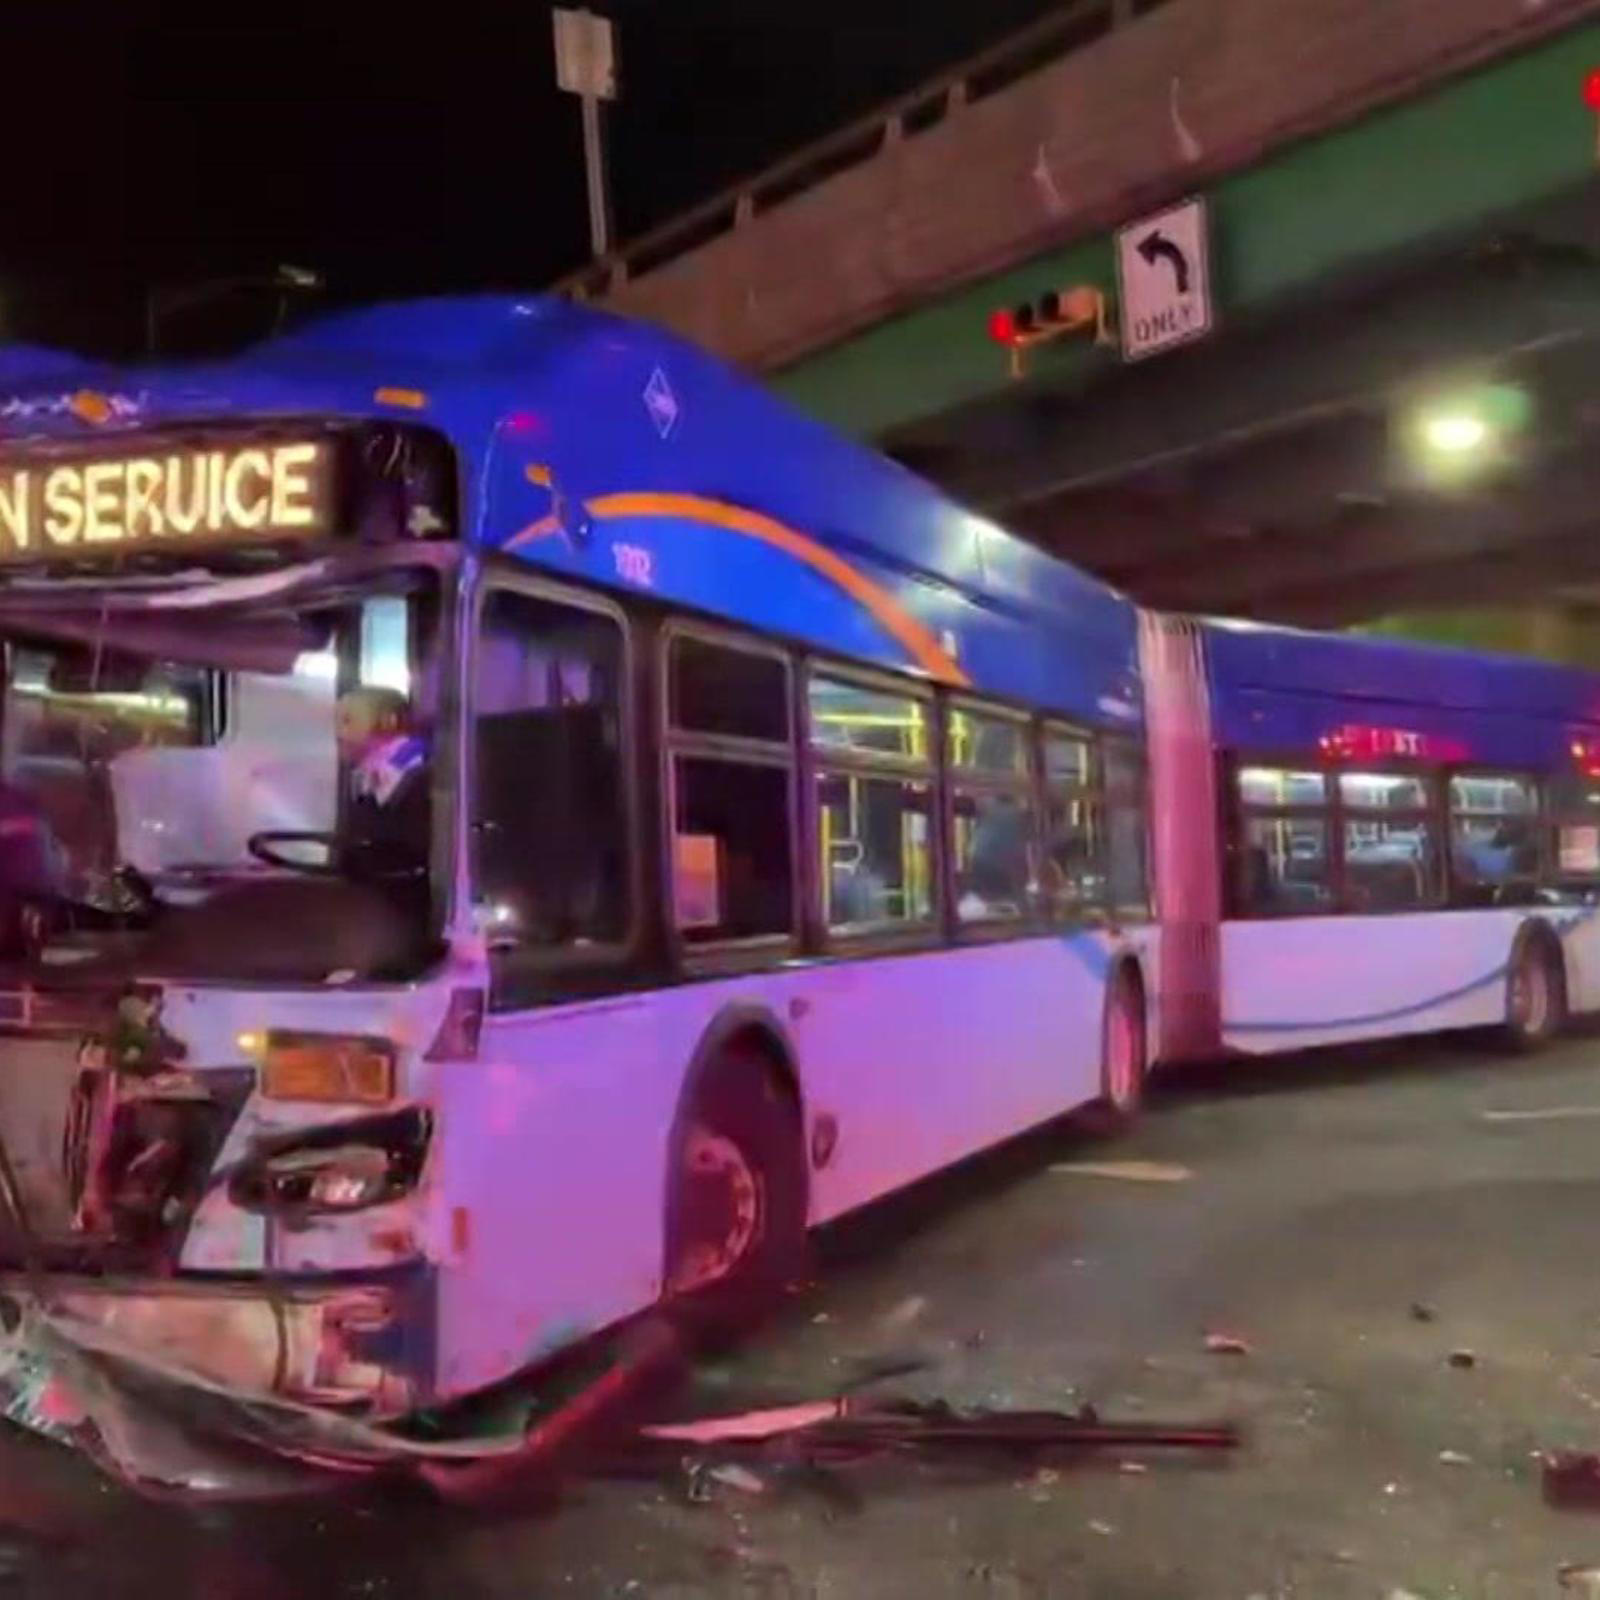 Sanitation truck strikes MTA bus in the Bronx; 13 hurt